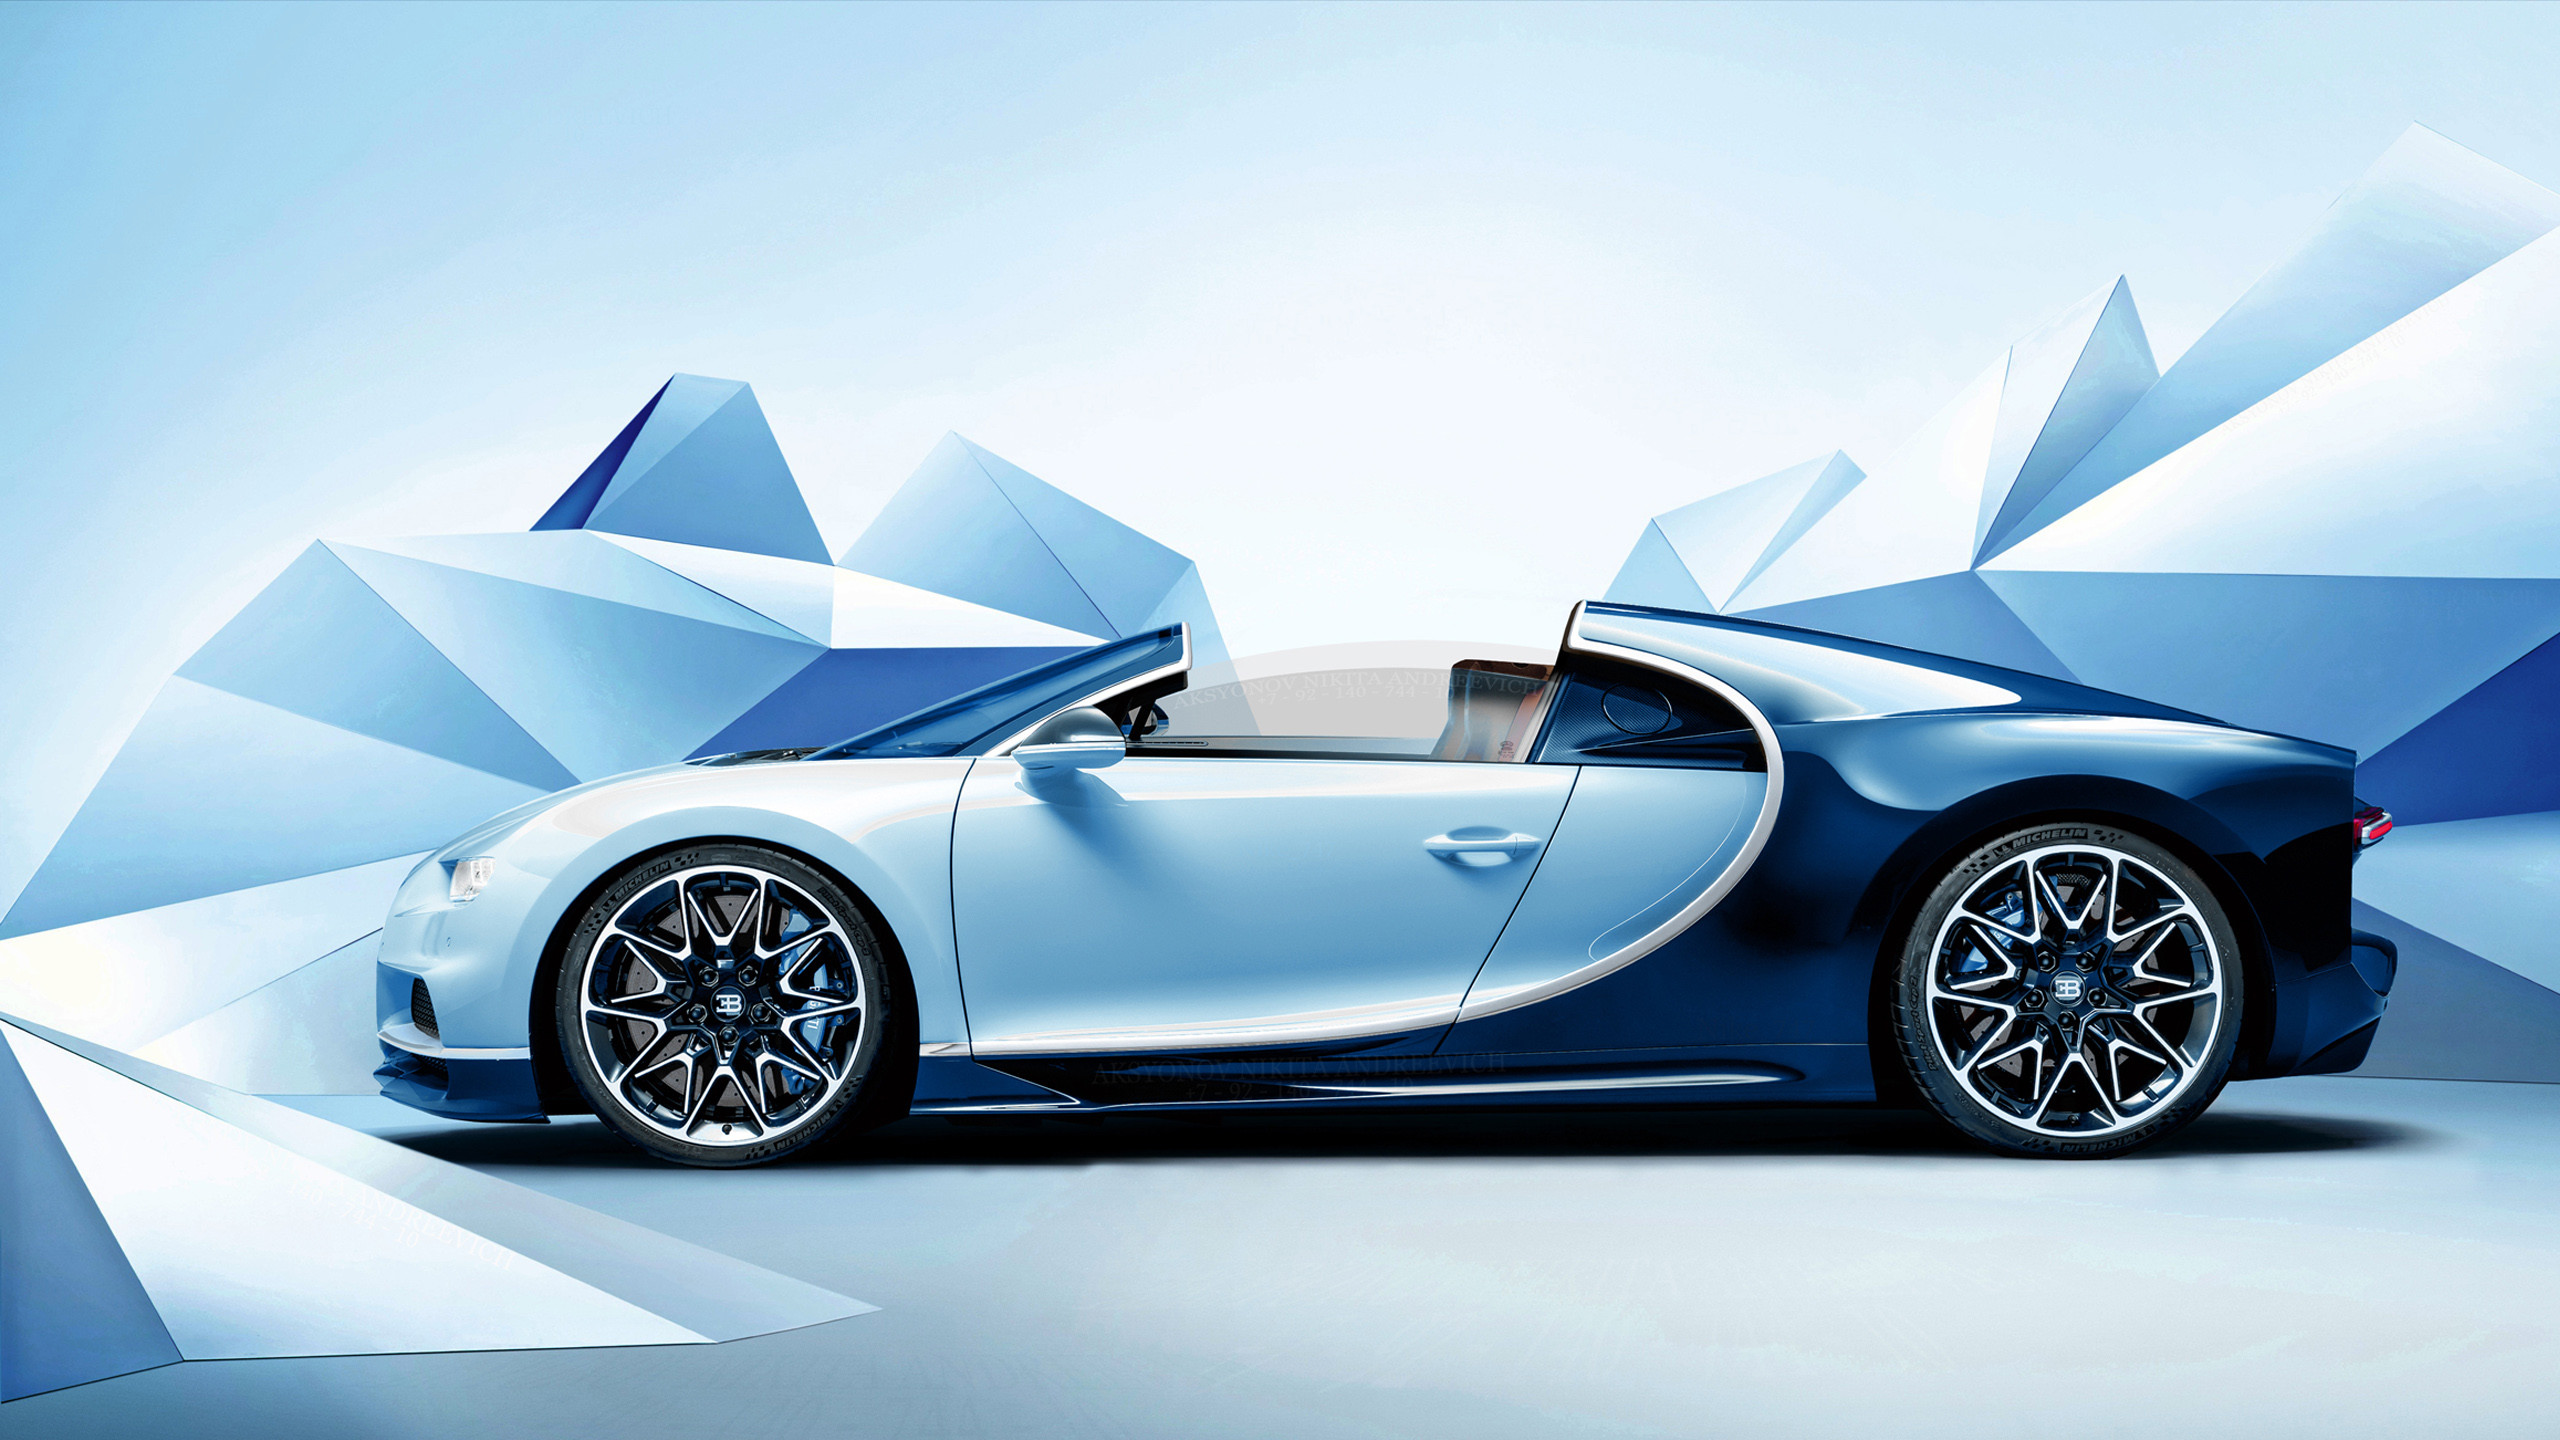 2560x1440 Bugatti-Veyron-Supercar-Red-HD-Wallpaper | Bugatti HD Wallpapers |  Pinterest | Bugatti, Hd wallpaper and Wallpaper